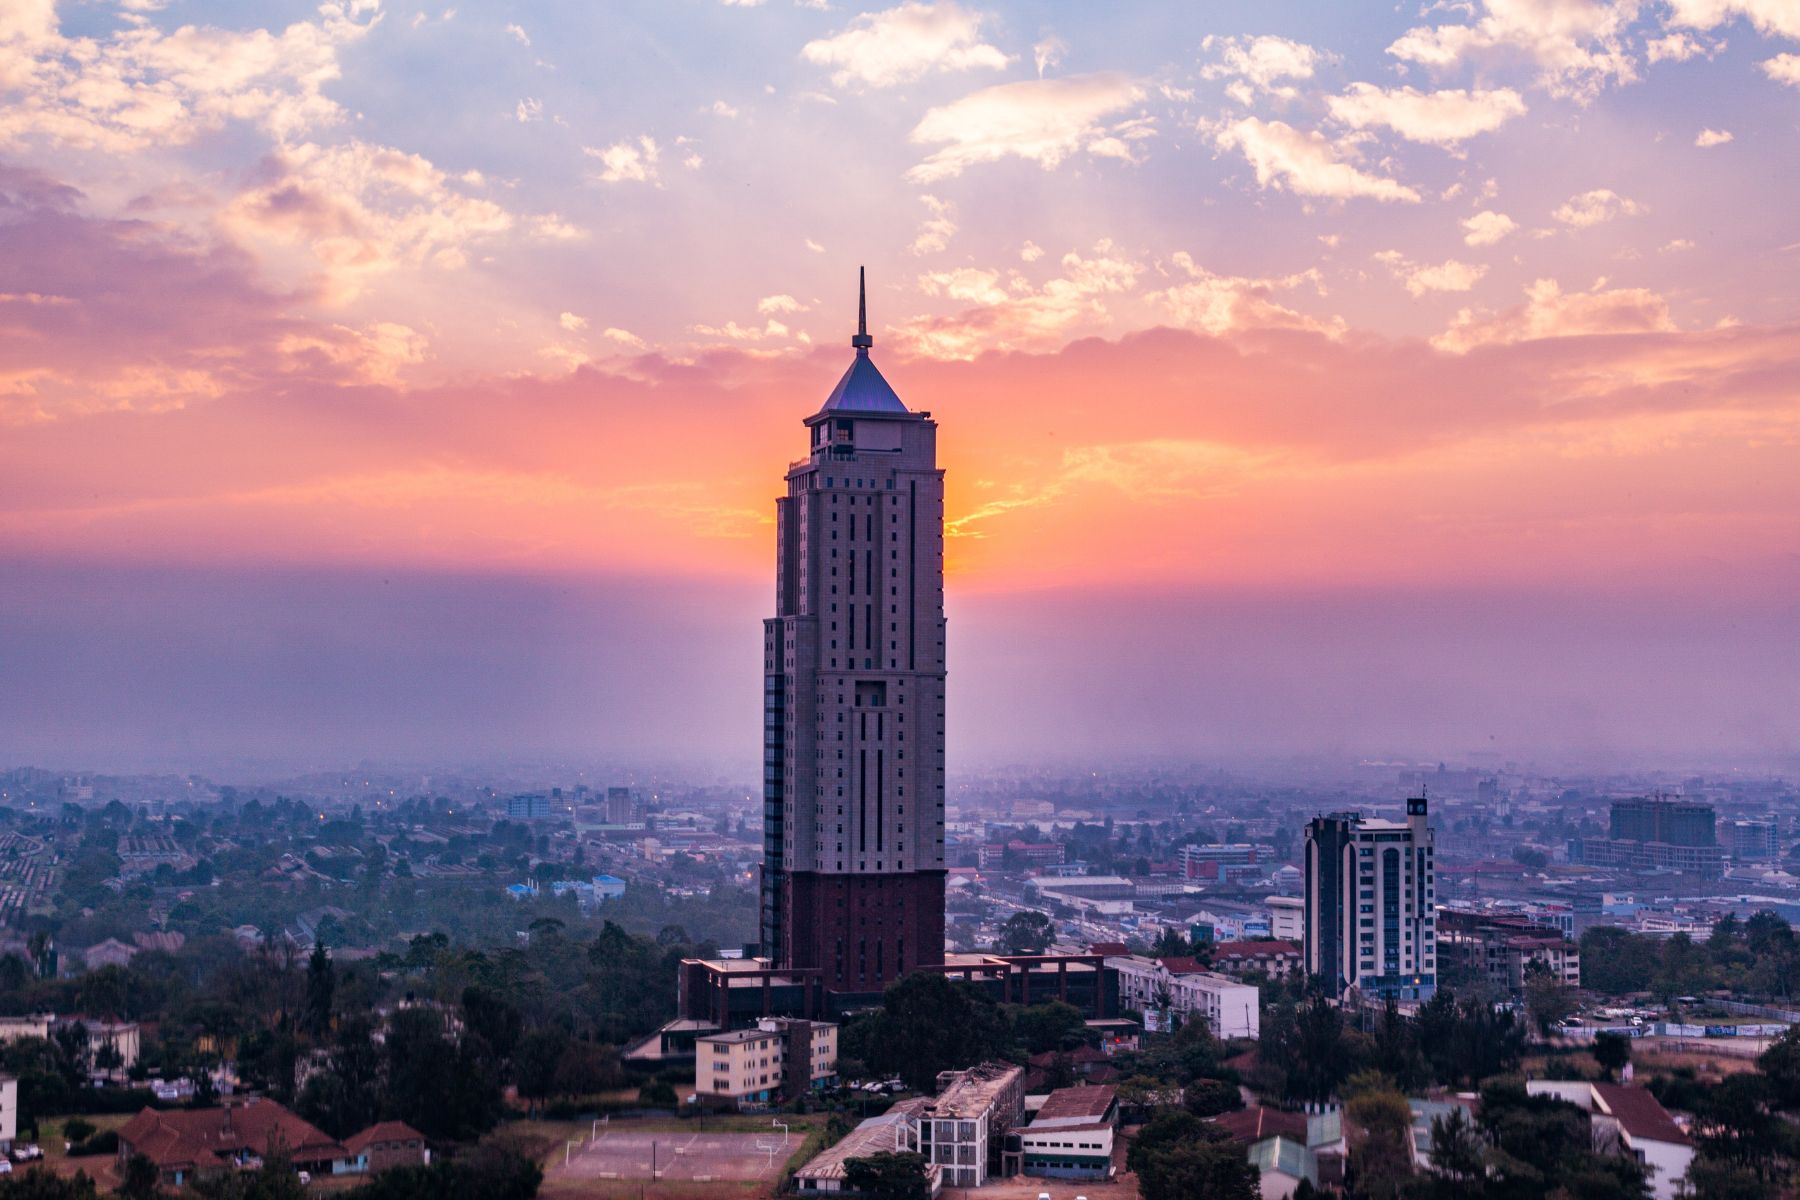 Old Mutual Tower at sunset, Nairobi, Kenya